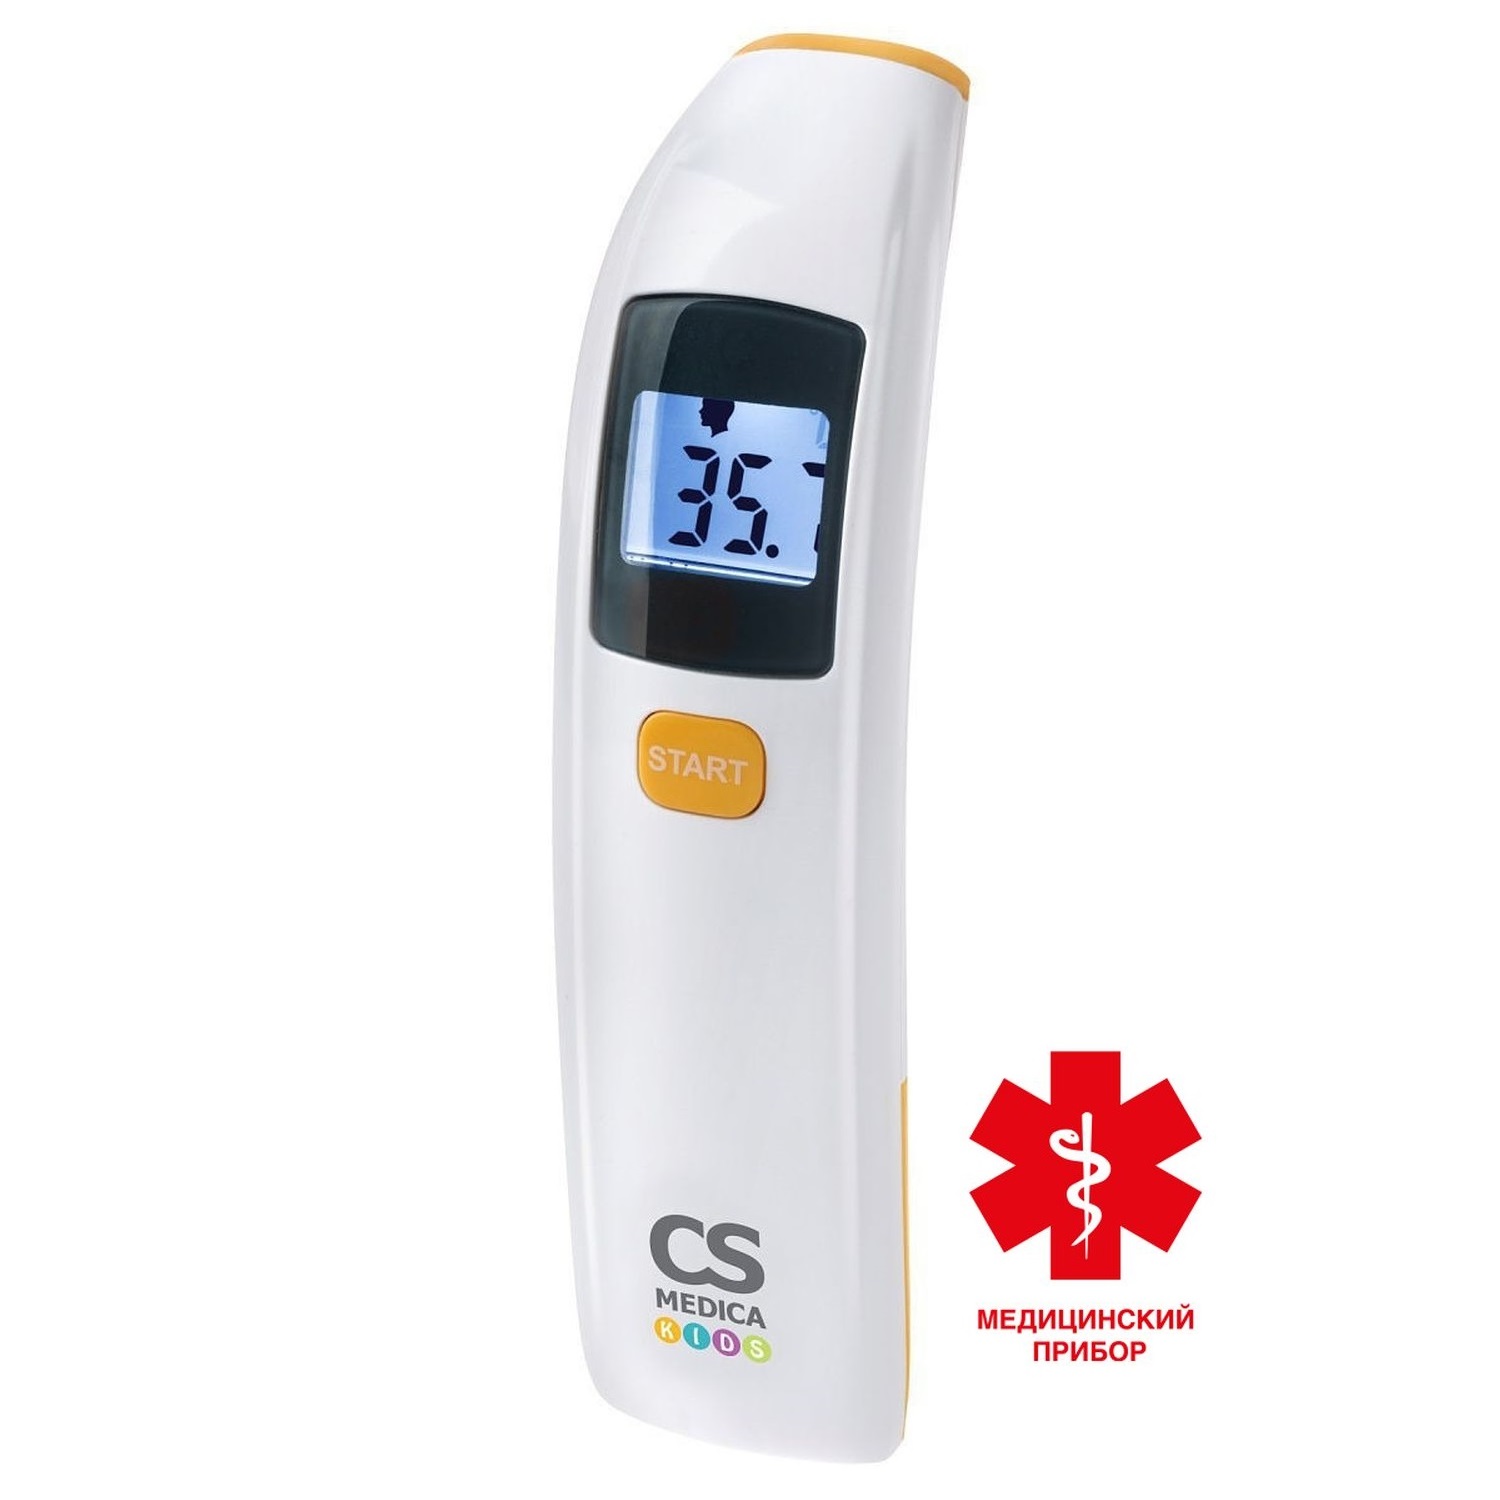 СиЭс Медика термометр электронный медицинский бесконтактный CS-88 сиэс медика термометр электронный медицинский бесконтактный cs 88